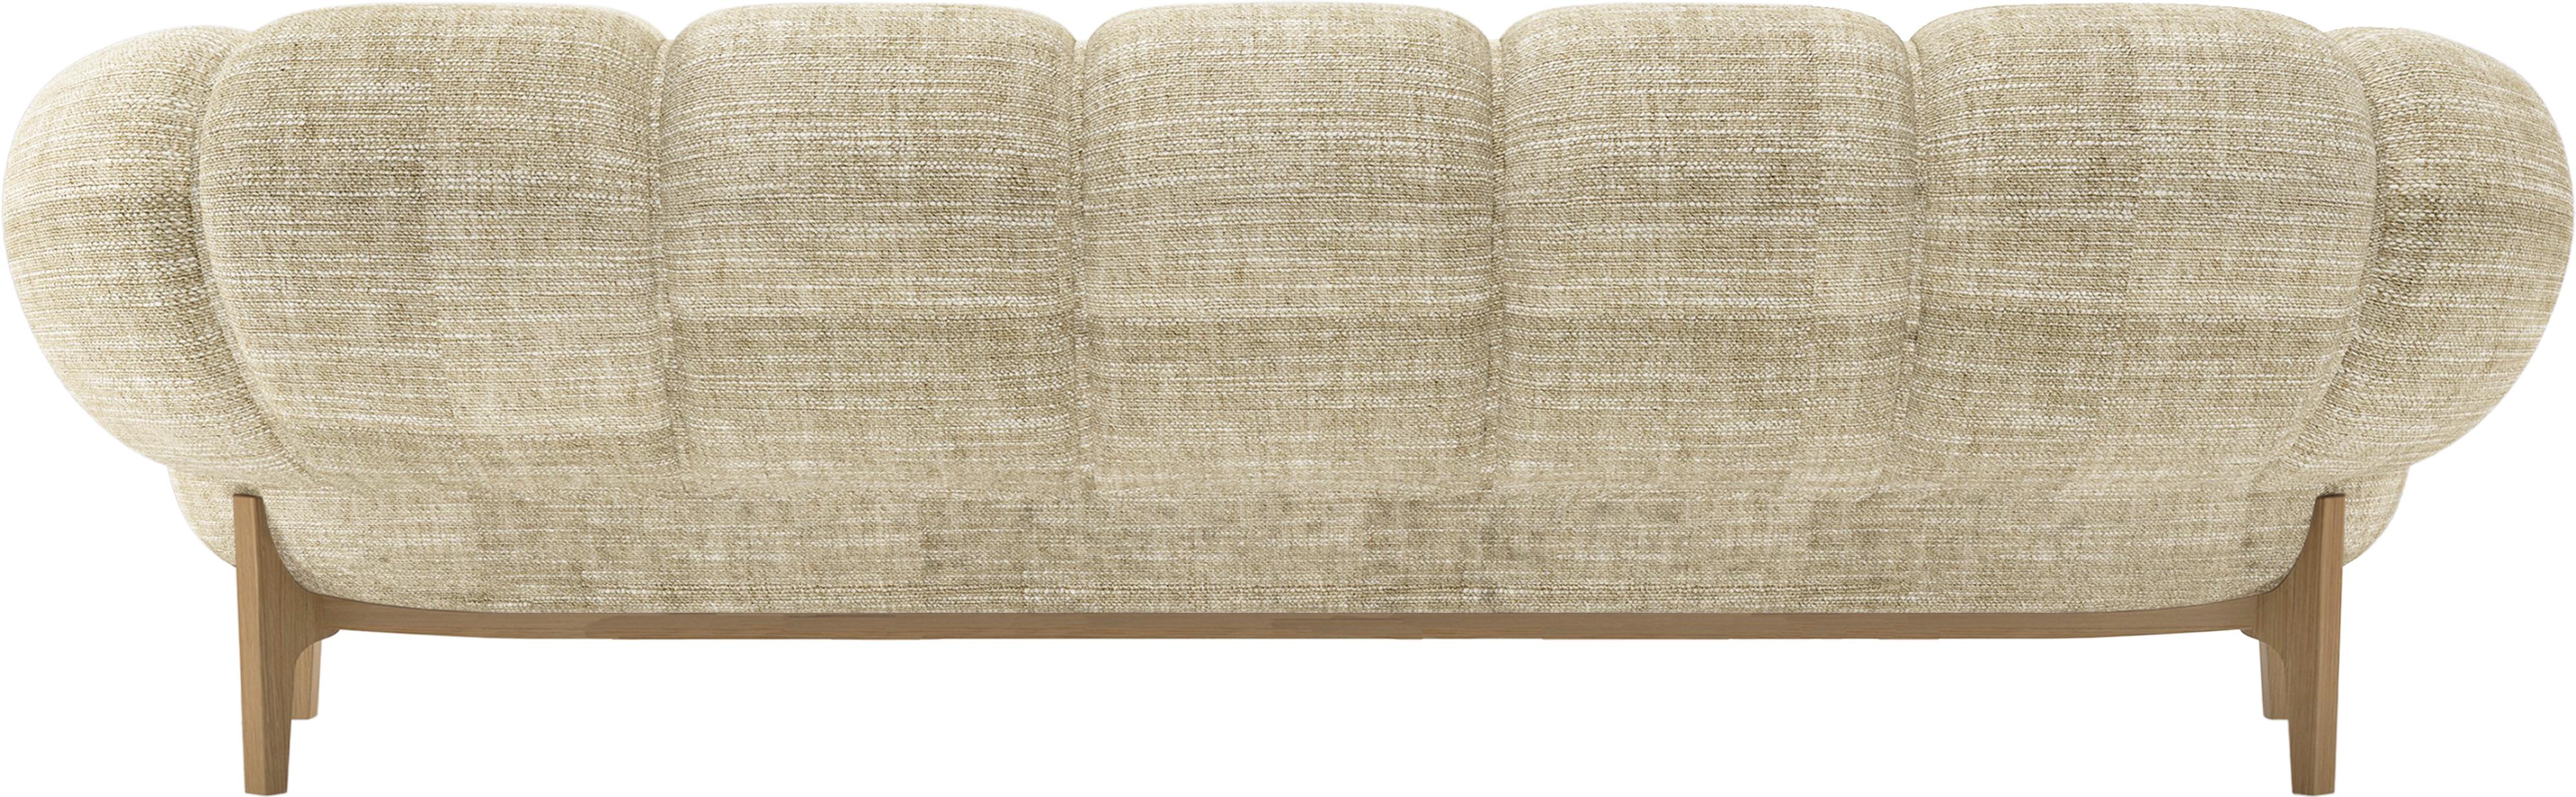 Mid-Century Modern Fabric 'Croissant' Sofa by Illum Wikkelsø for GUBI with Oak Legs For Sale